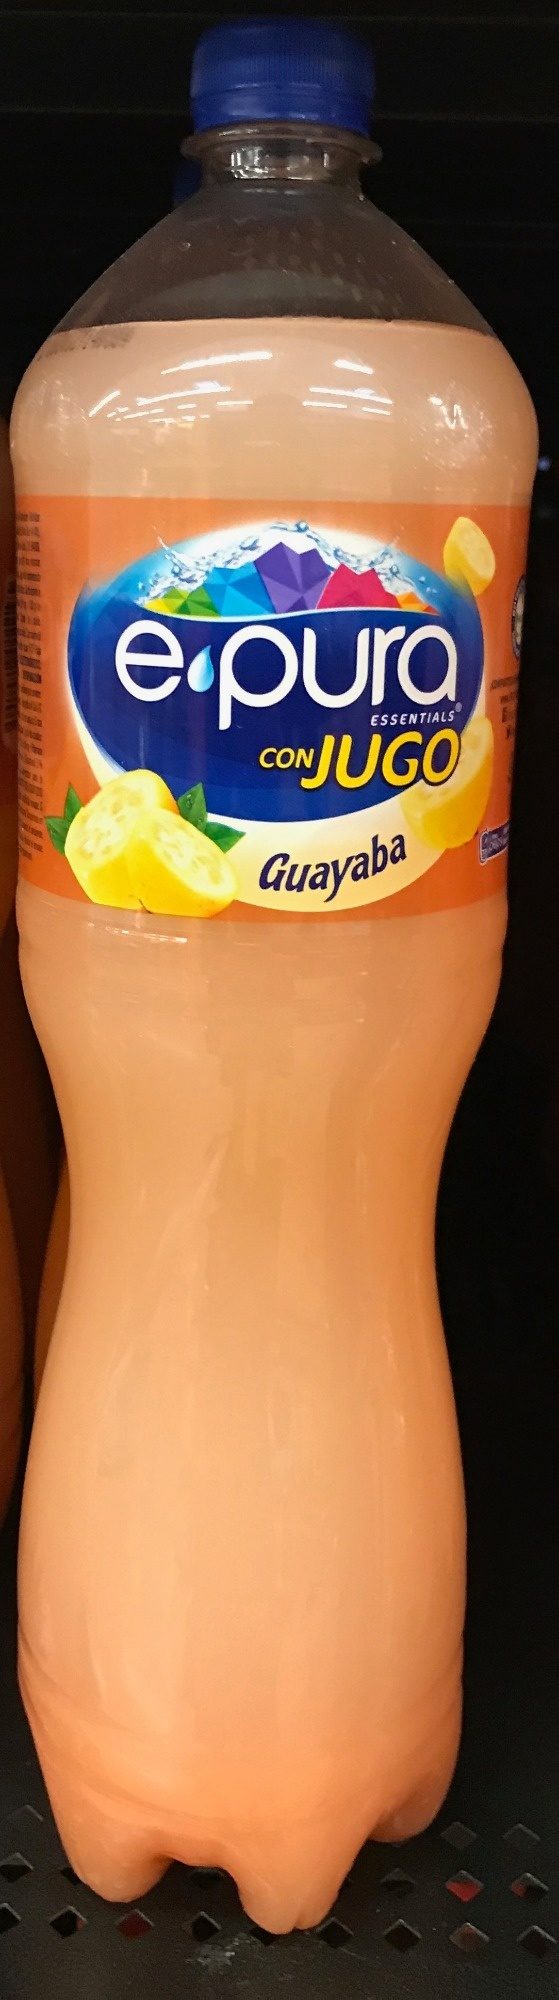 Agua con jugo de guayaba - Product - es